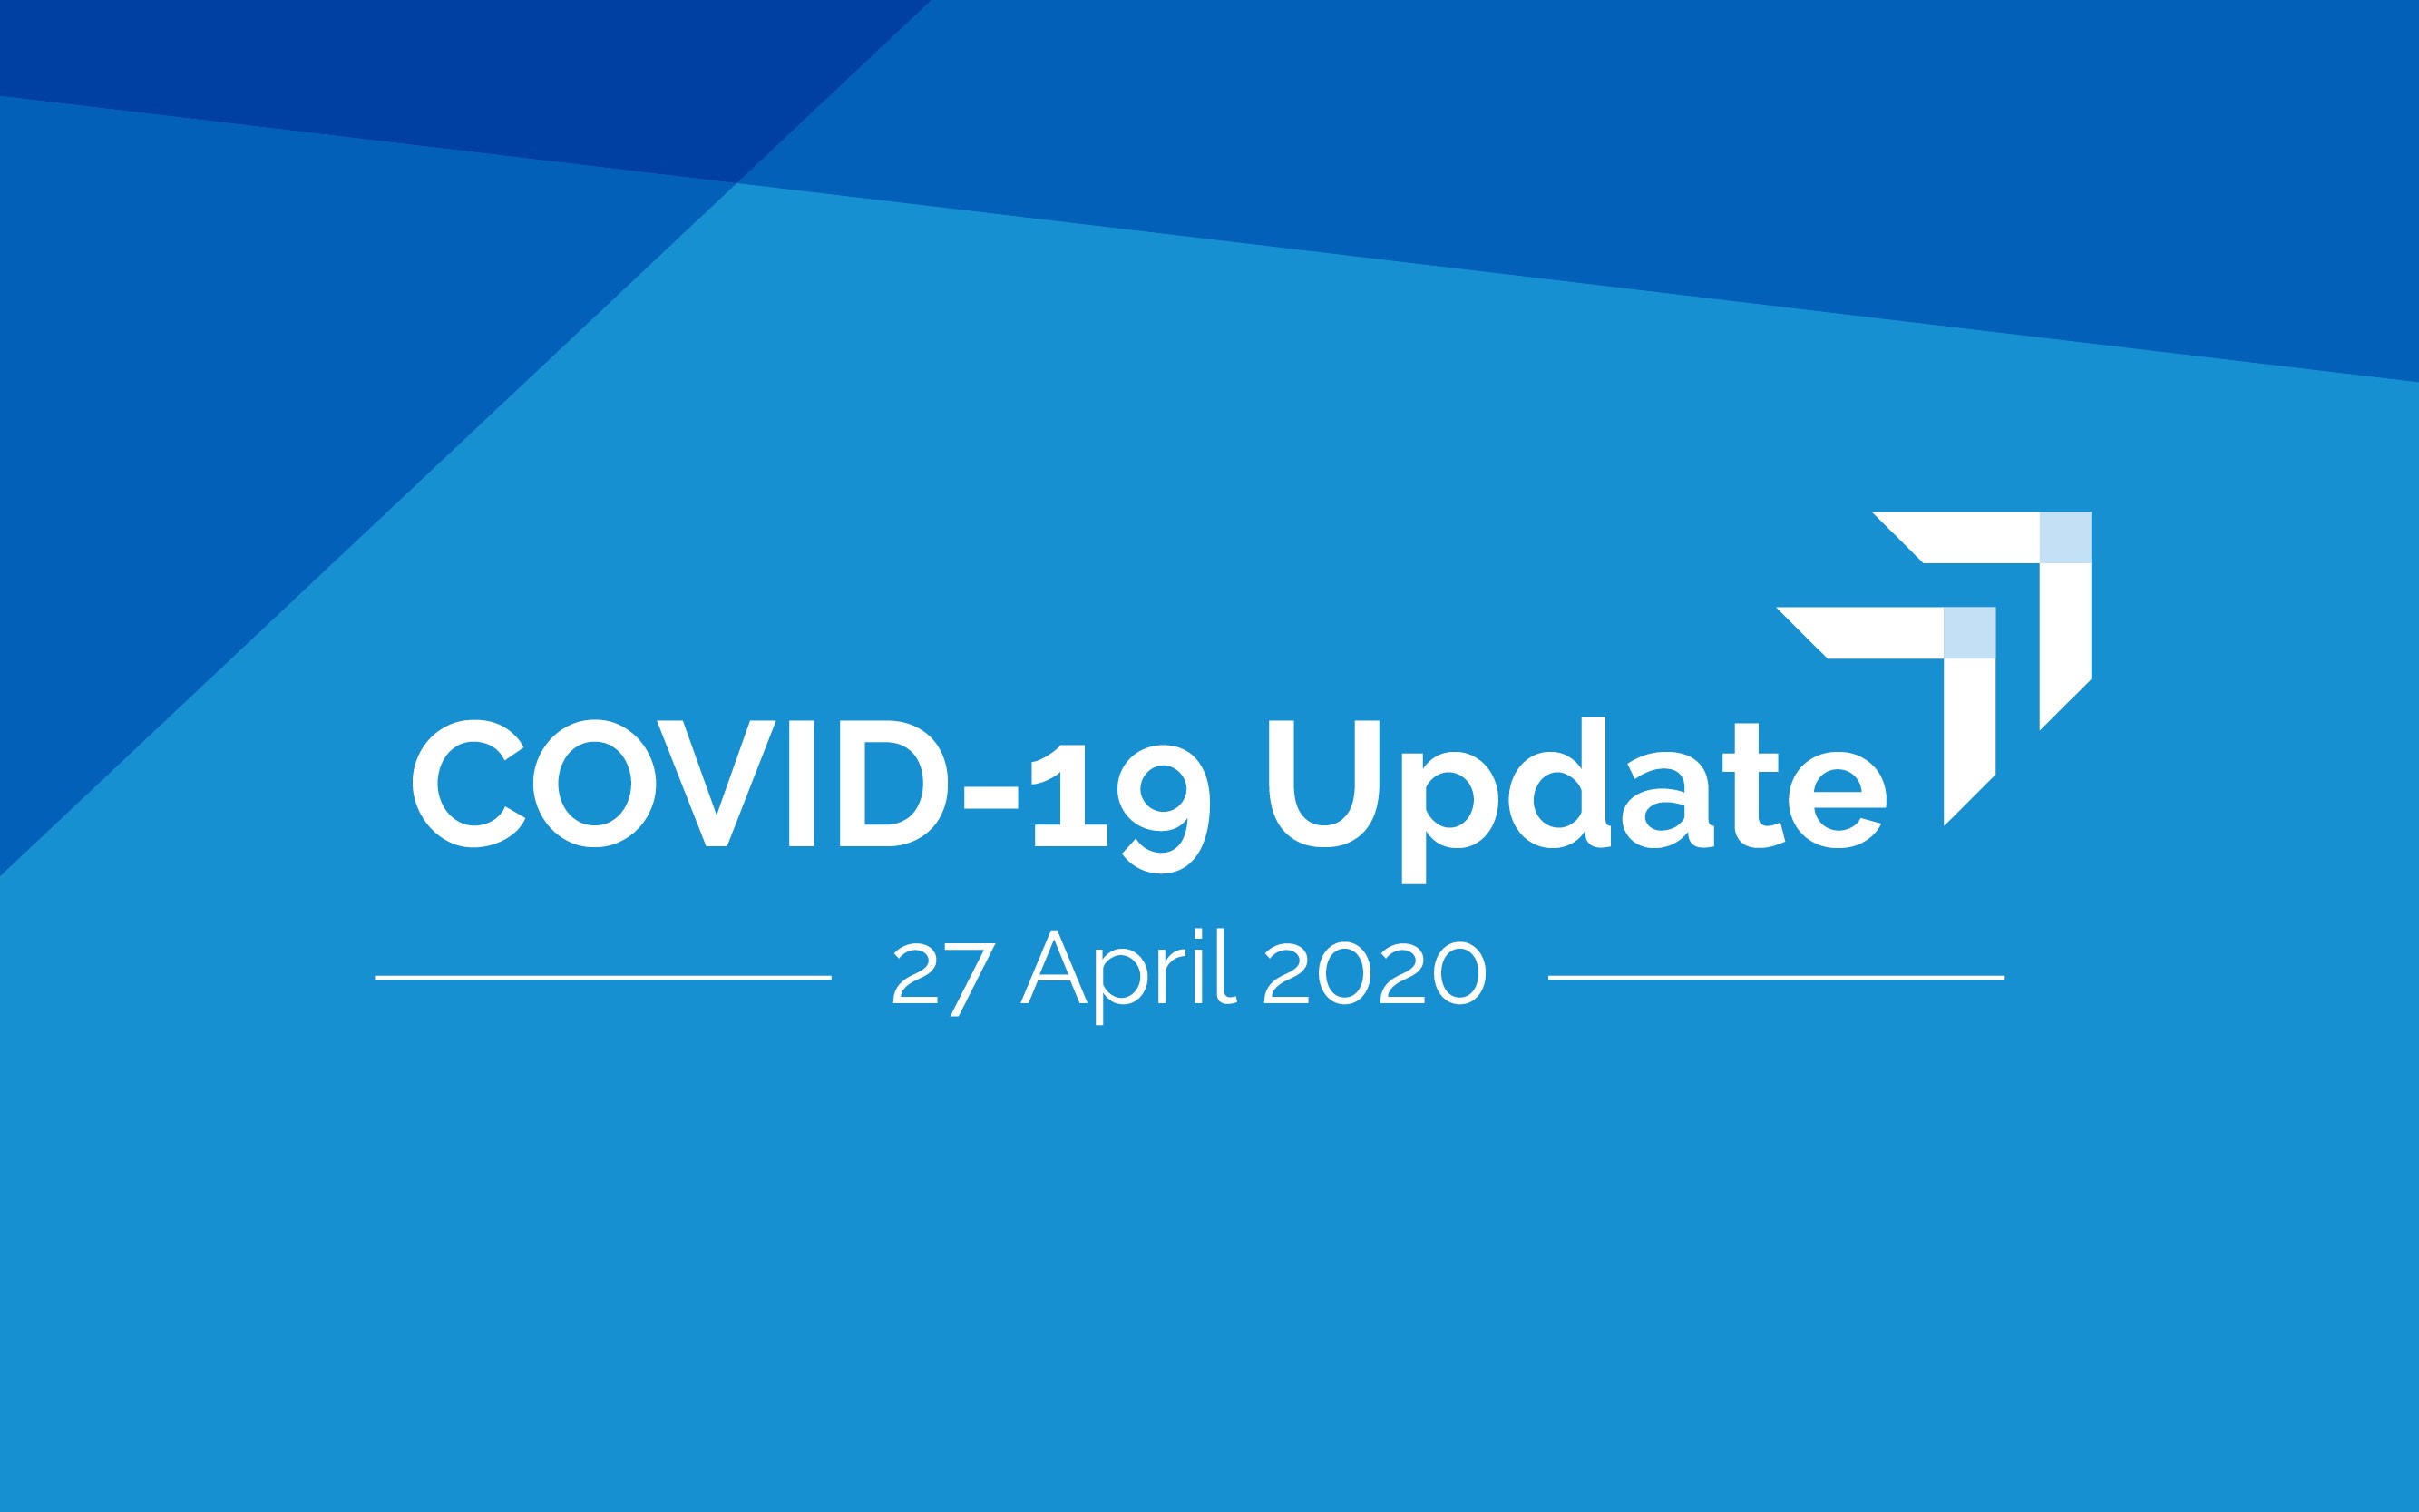 New Legislation and Regulation to respond to COVID-19